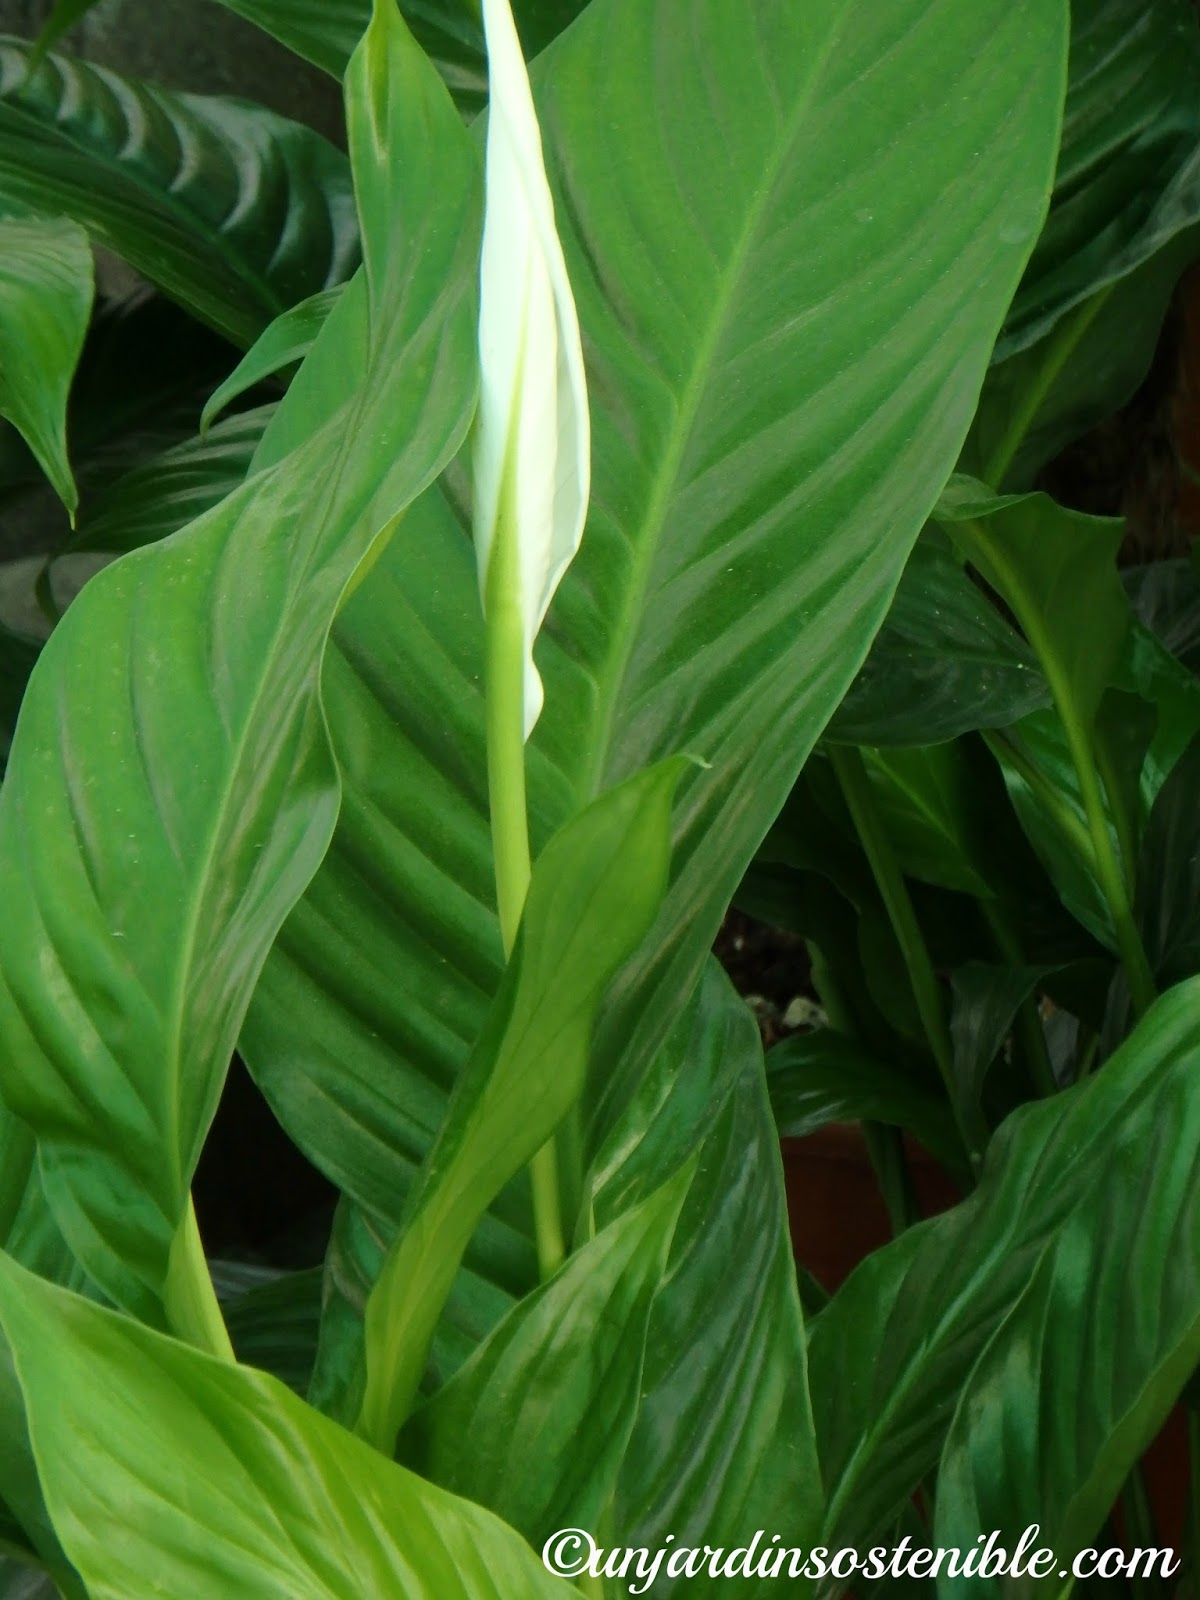 Spathiphyllum (Espatifilo, Bandera blanca etc.)